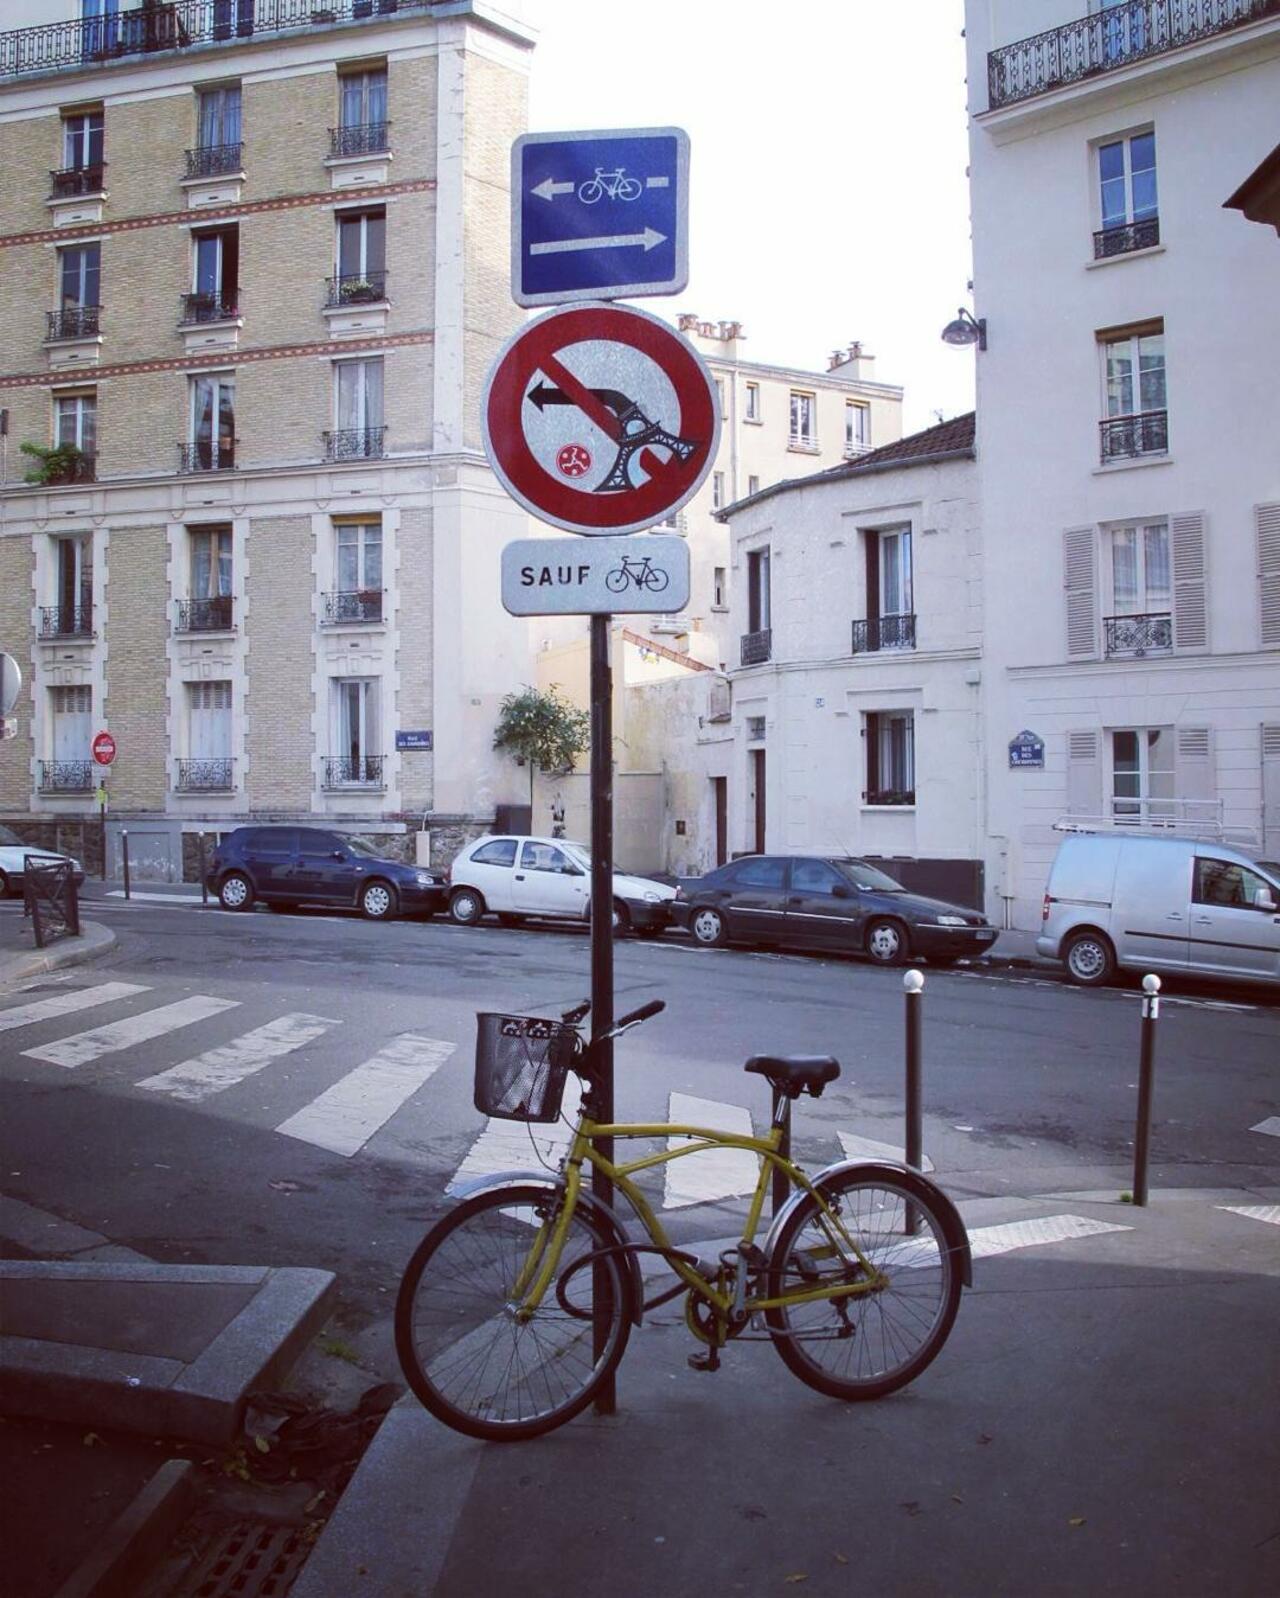 #Paris #graffiti photo by @streetrorart http://ift.tt/1NvTkli #StreetArt https://t.co/7Ub63y5WbD